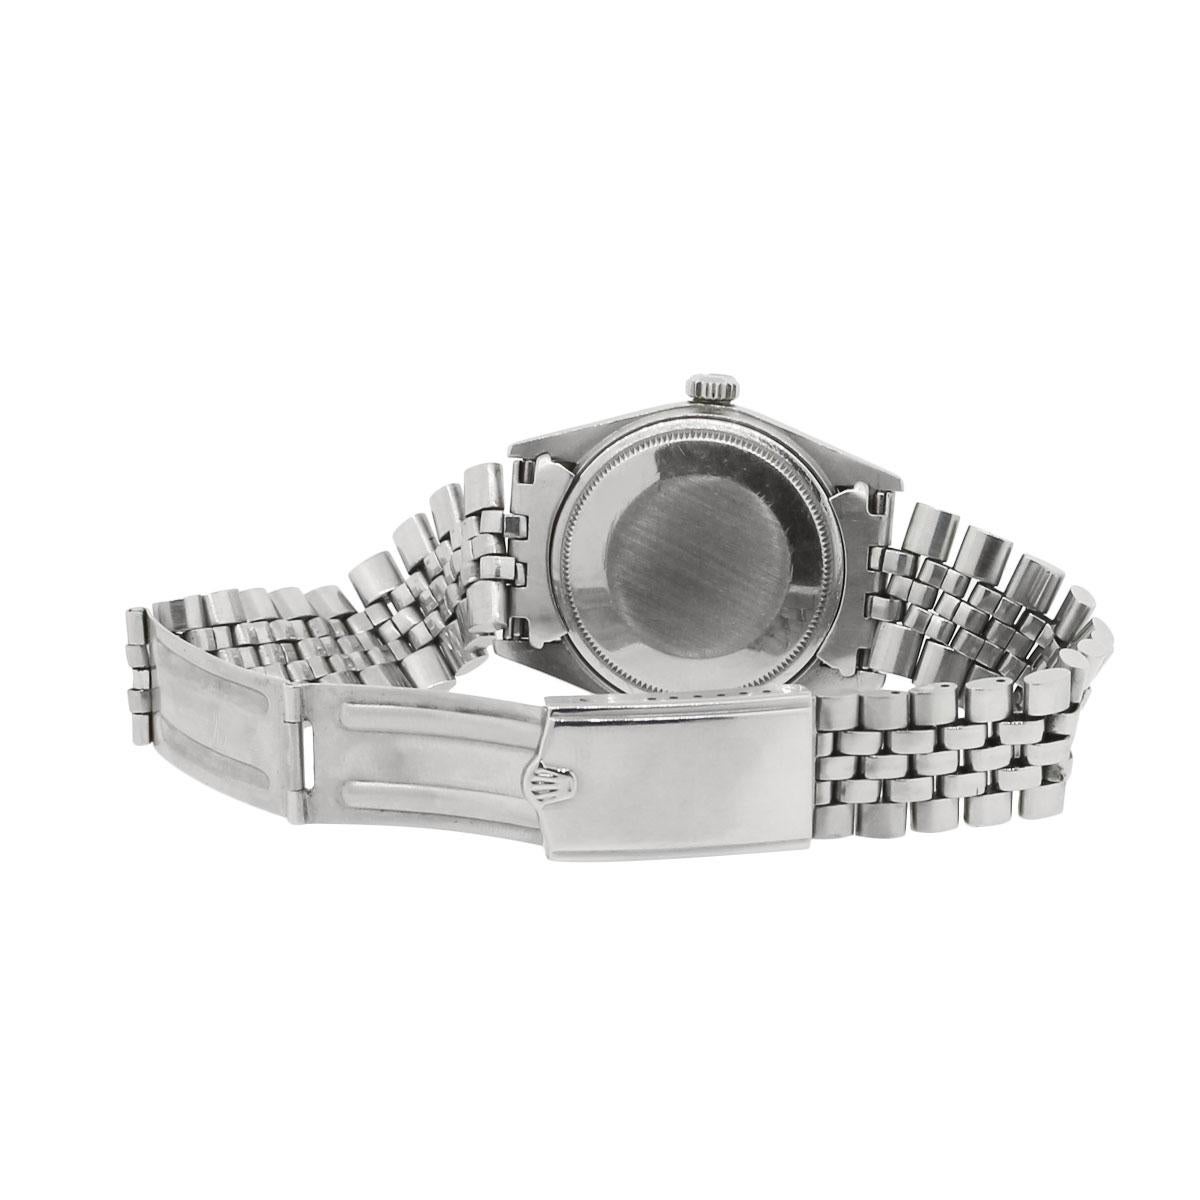 Women's or Men's Rolex Stainless steel Datejust Automatic Wristwatch Ref 1601 